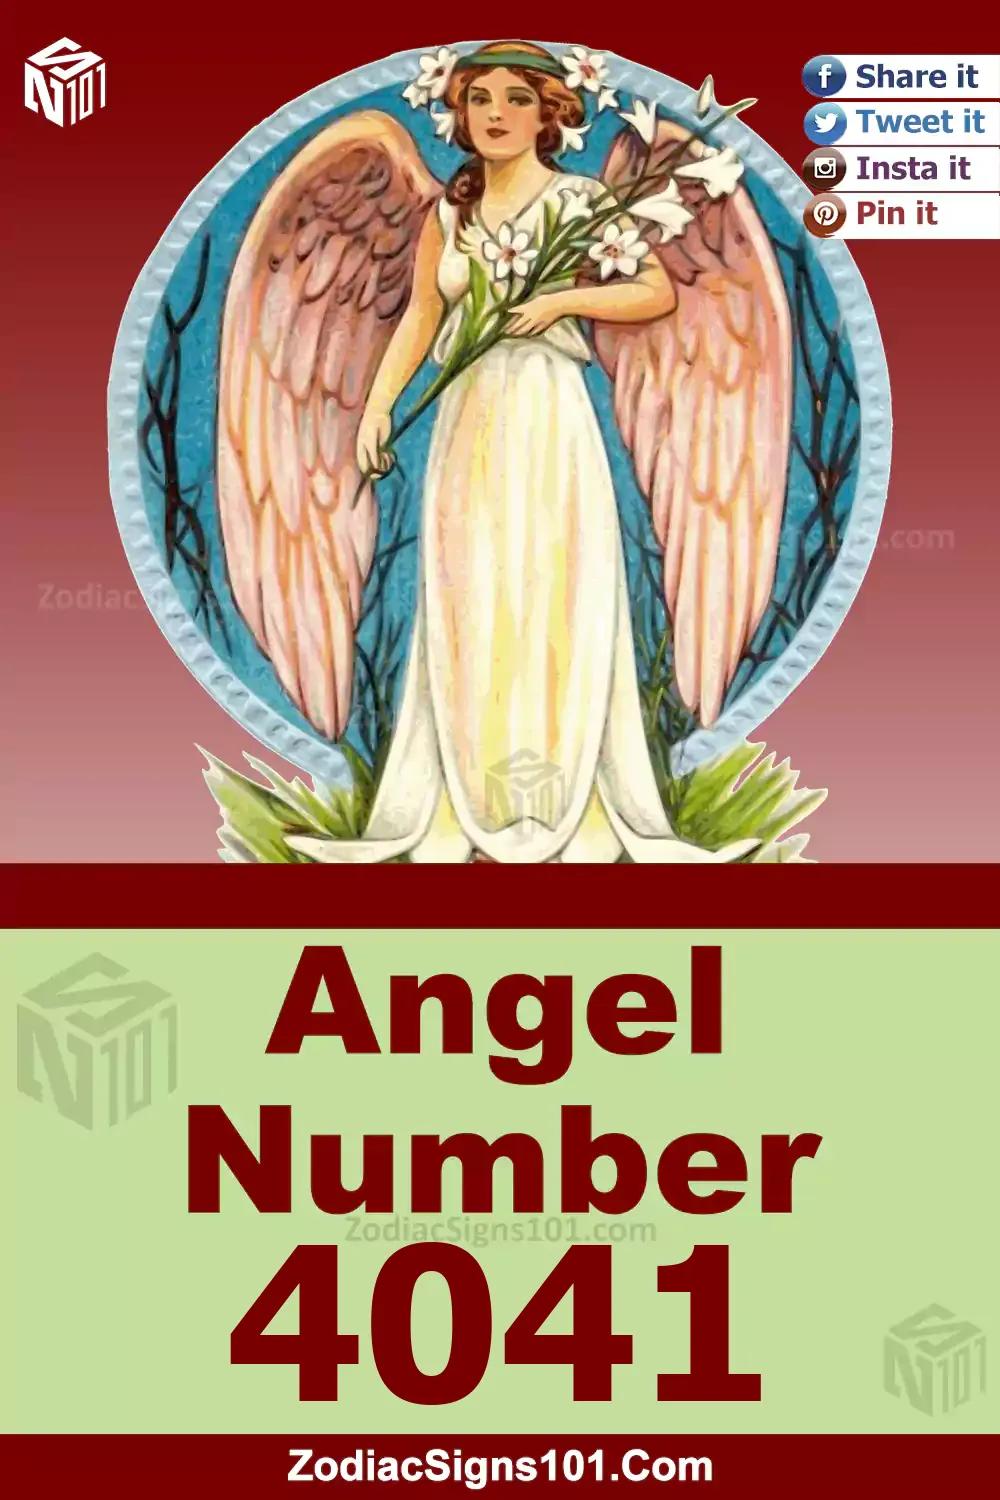 4041-Angel-Number-Meaning.jpg